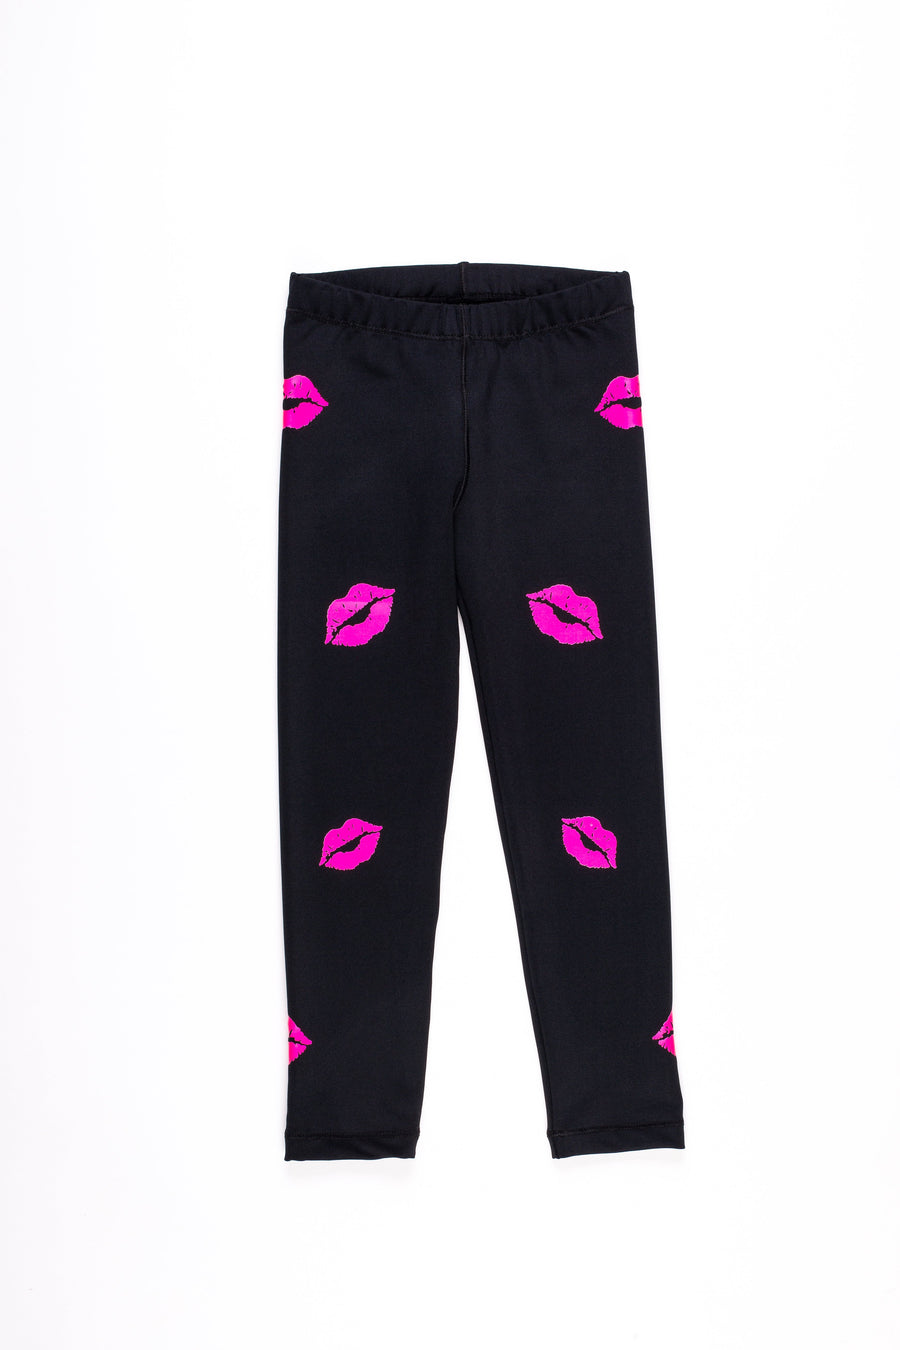 Kisses Hot Pink Black Leggings-Legging-Fanilu 